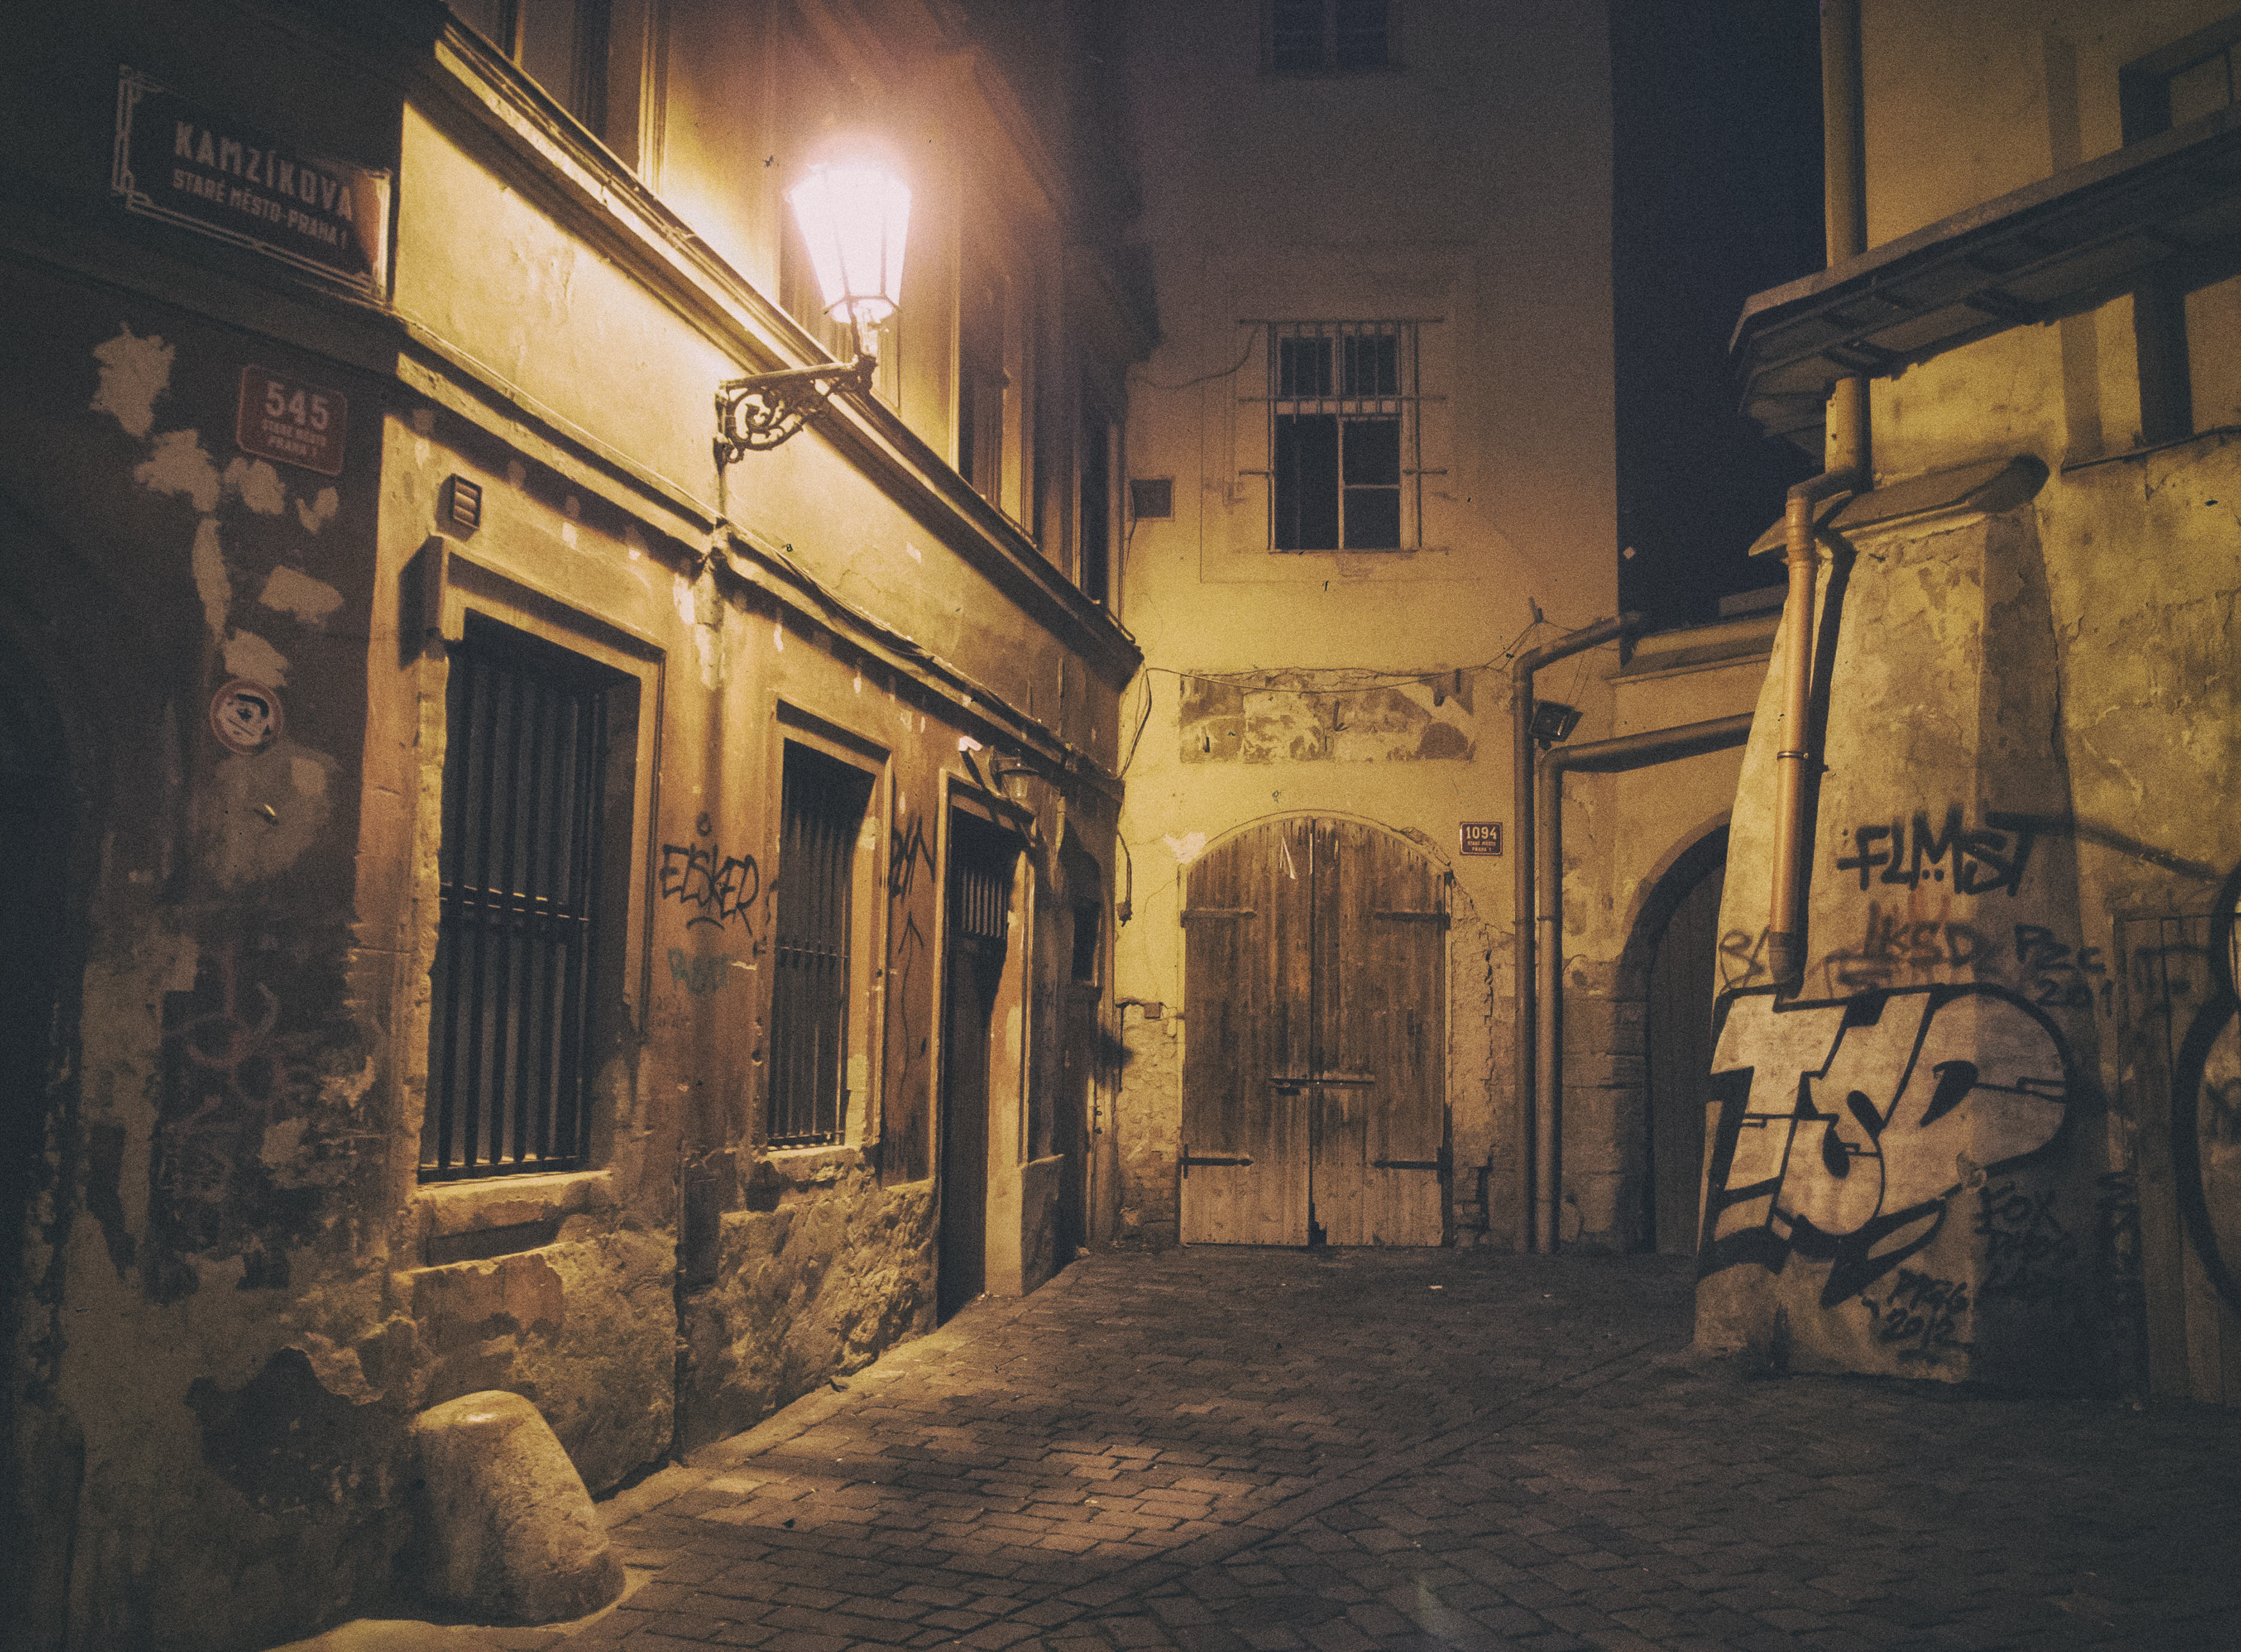 Free Image: Old street in Prague | Libreshot Public Domain Photos